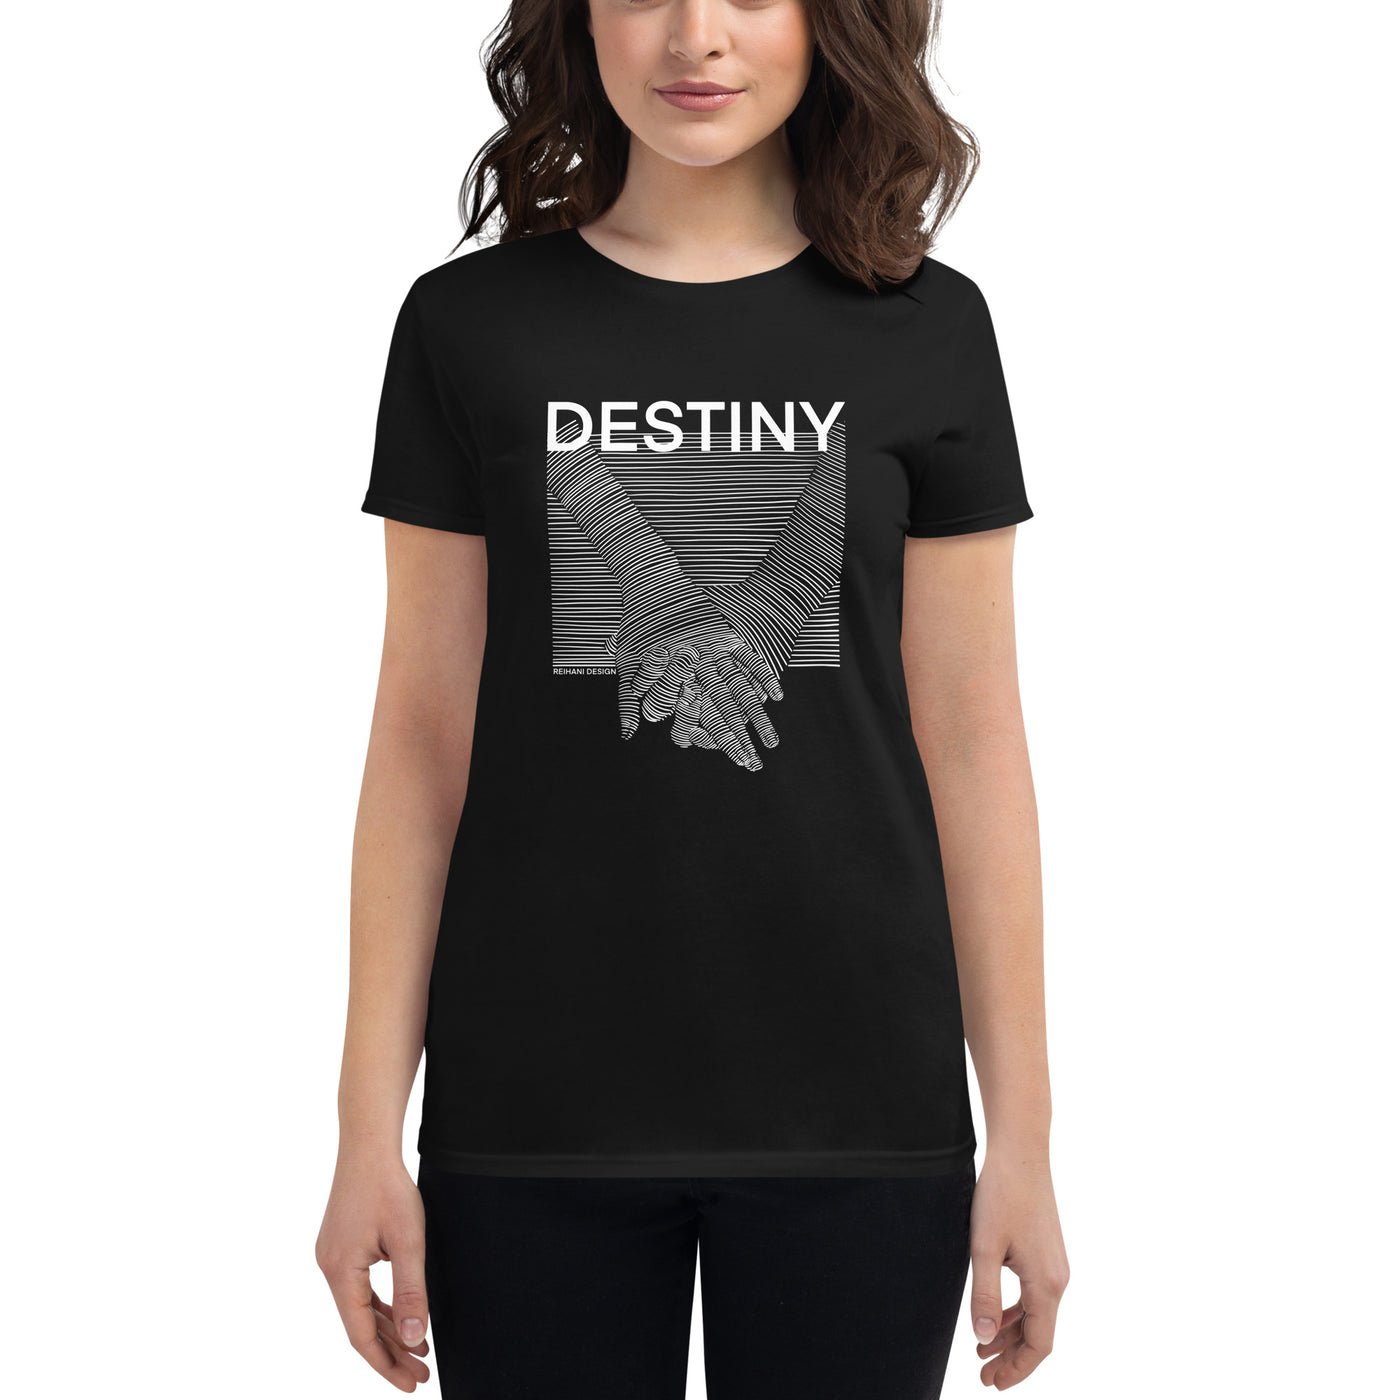 Women's short sleeve t-shirt with Destiny imprint